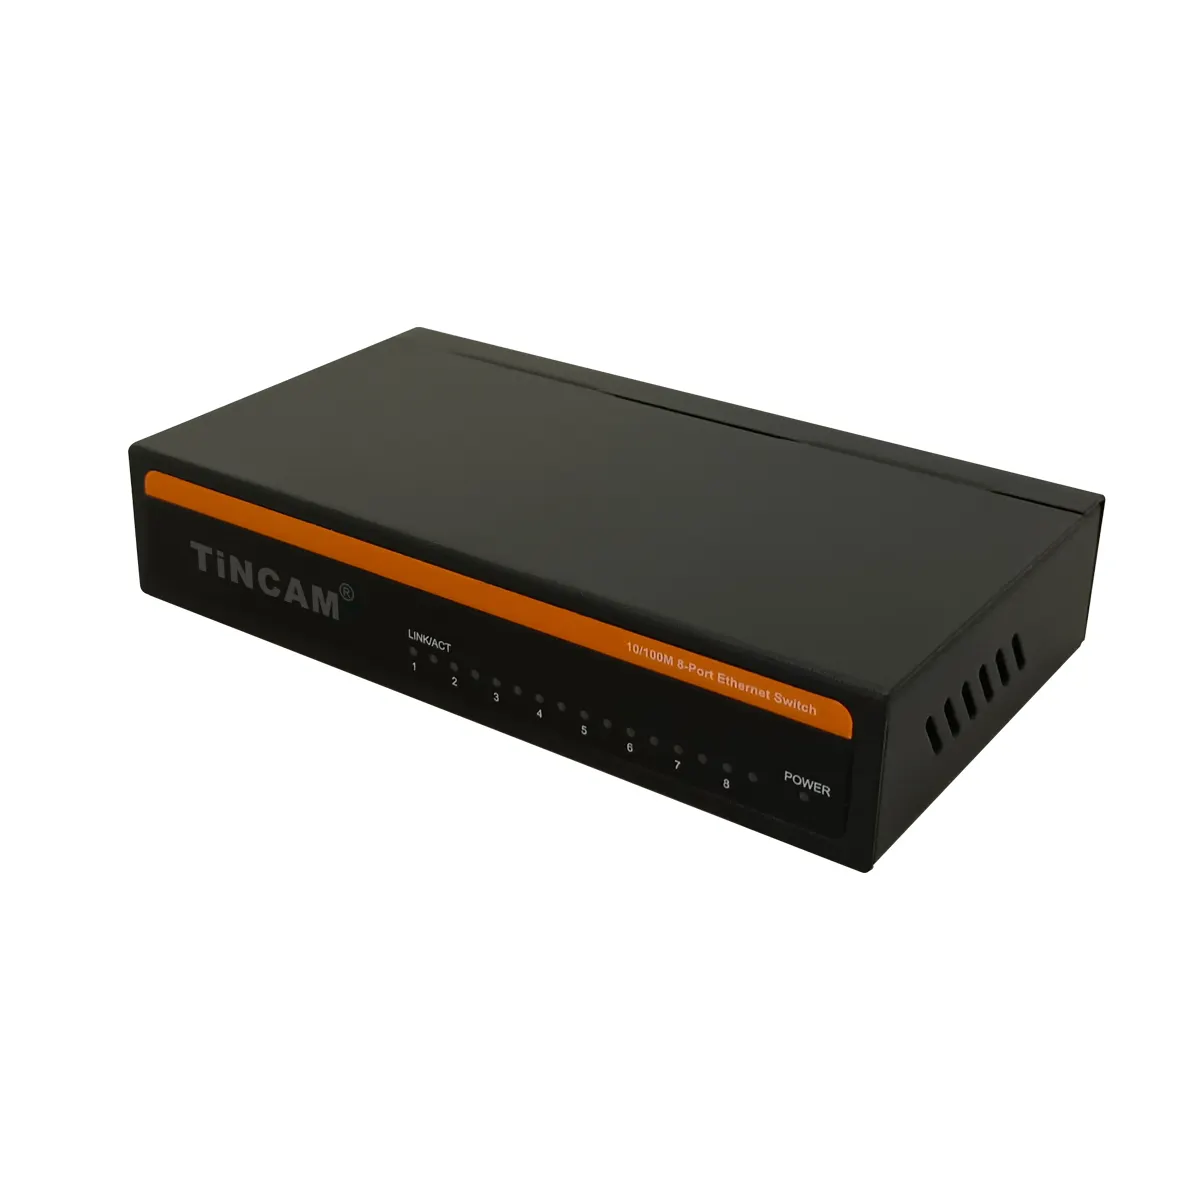 Interruttore di rete TINCAM 8 porte 10/100Mbps Ethernet veloce Ethernet RJ45 LAN cassa in lega di acciaio fornitura di fabbrica OEM